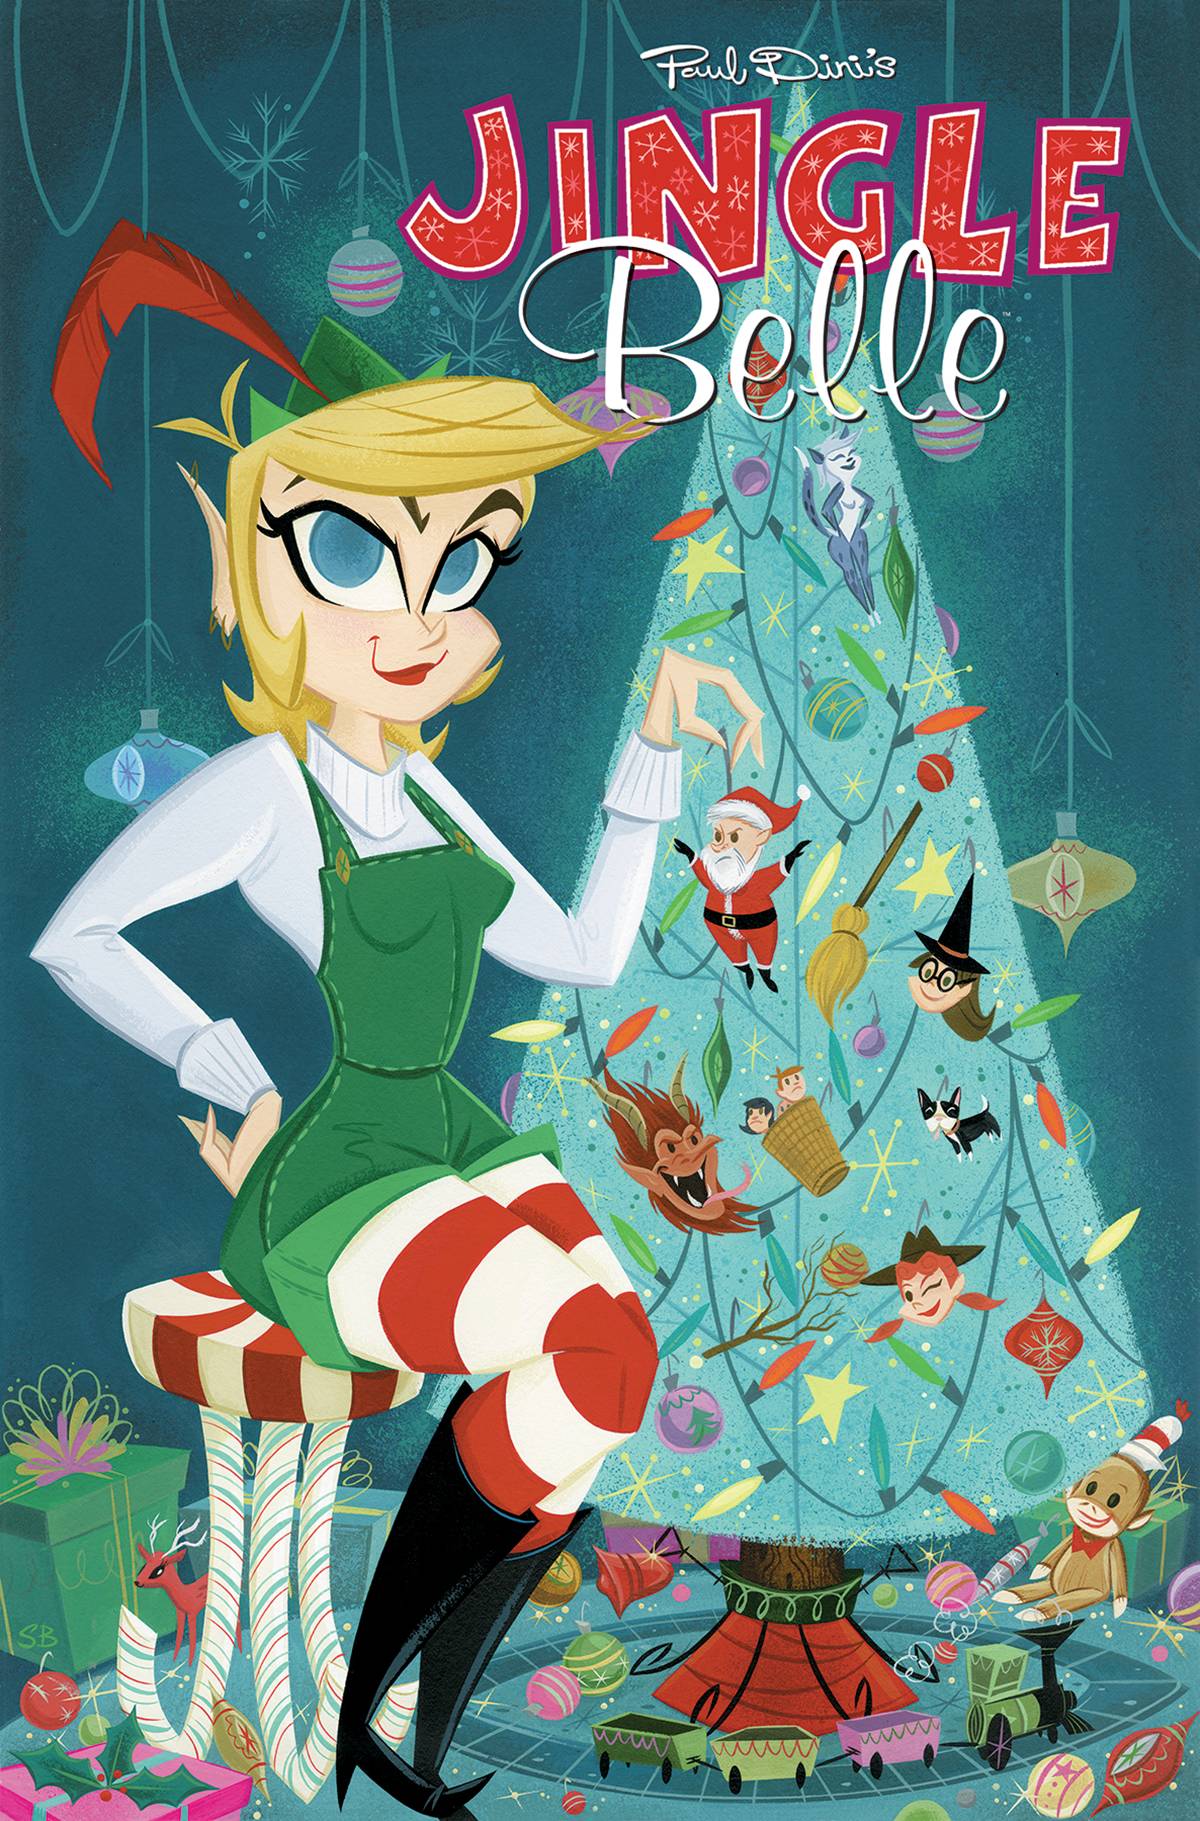 Jingle Belle Whole Package Graphic Novel